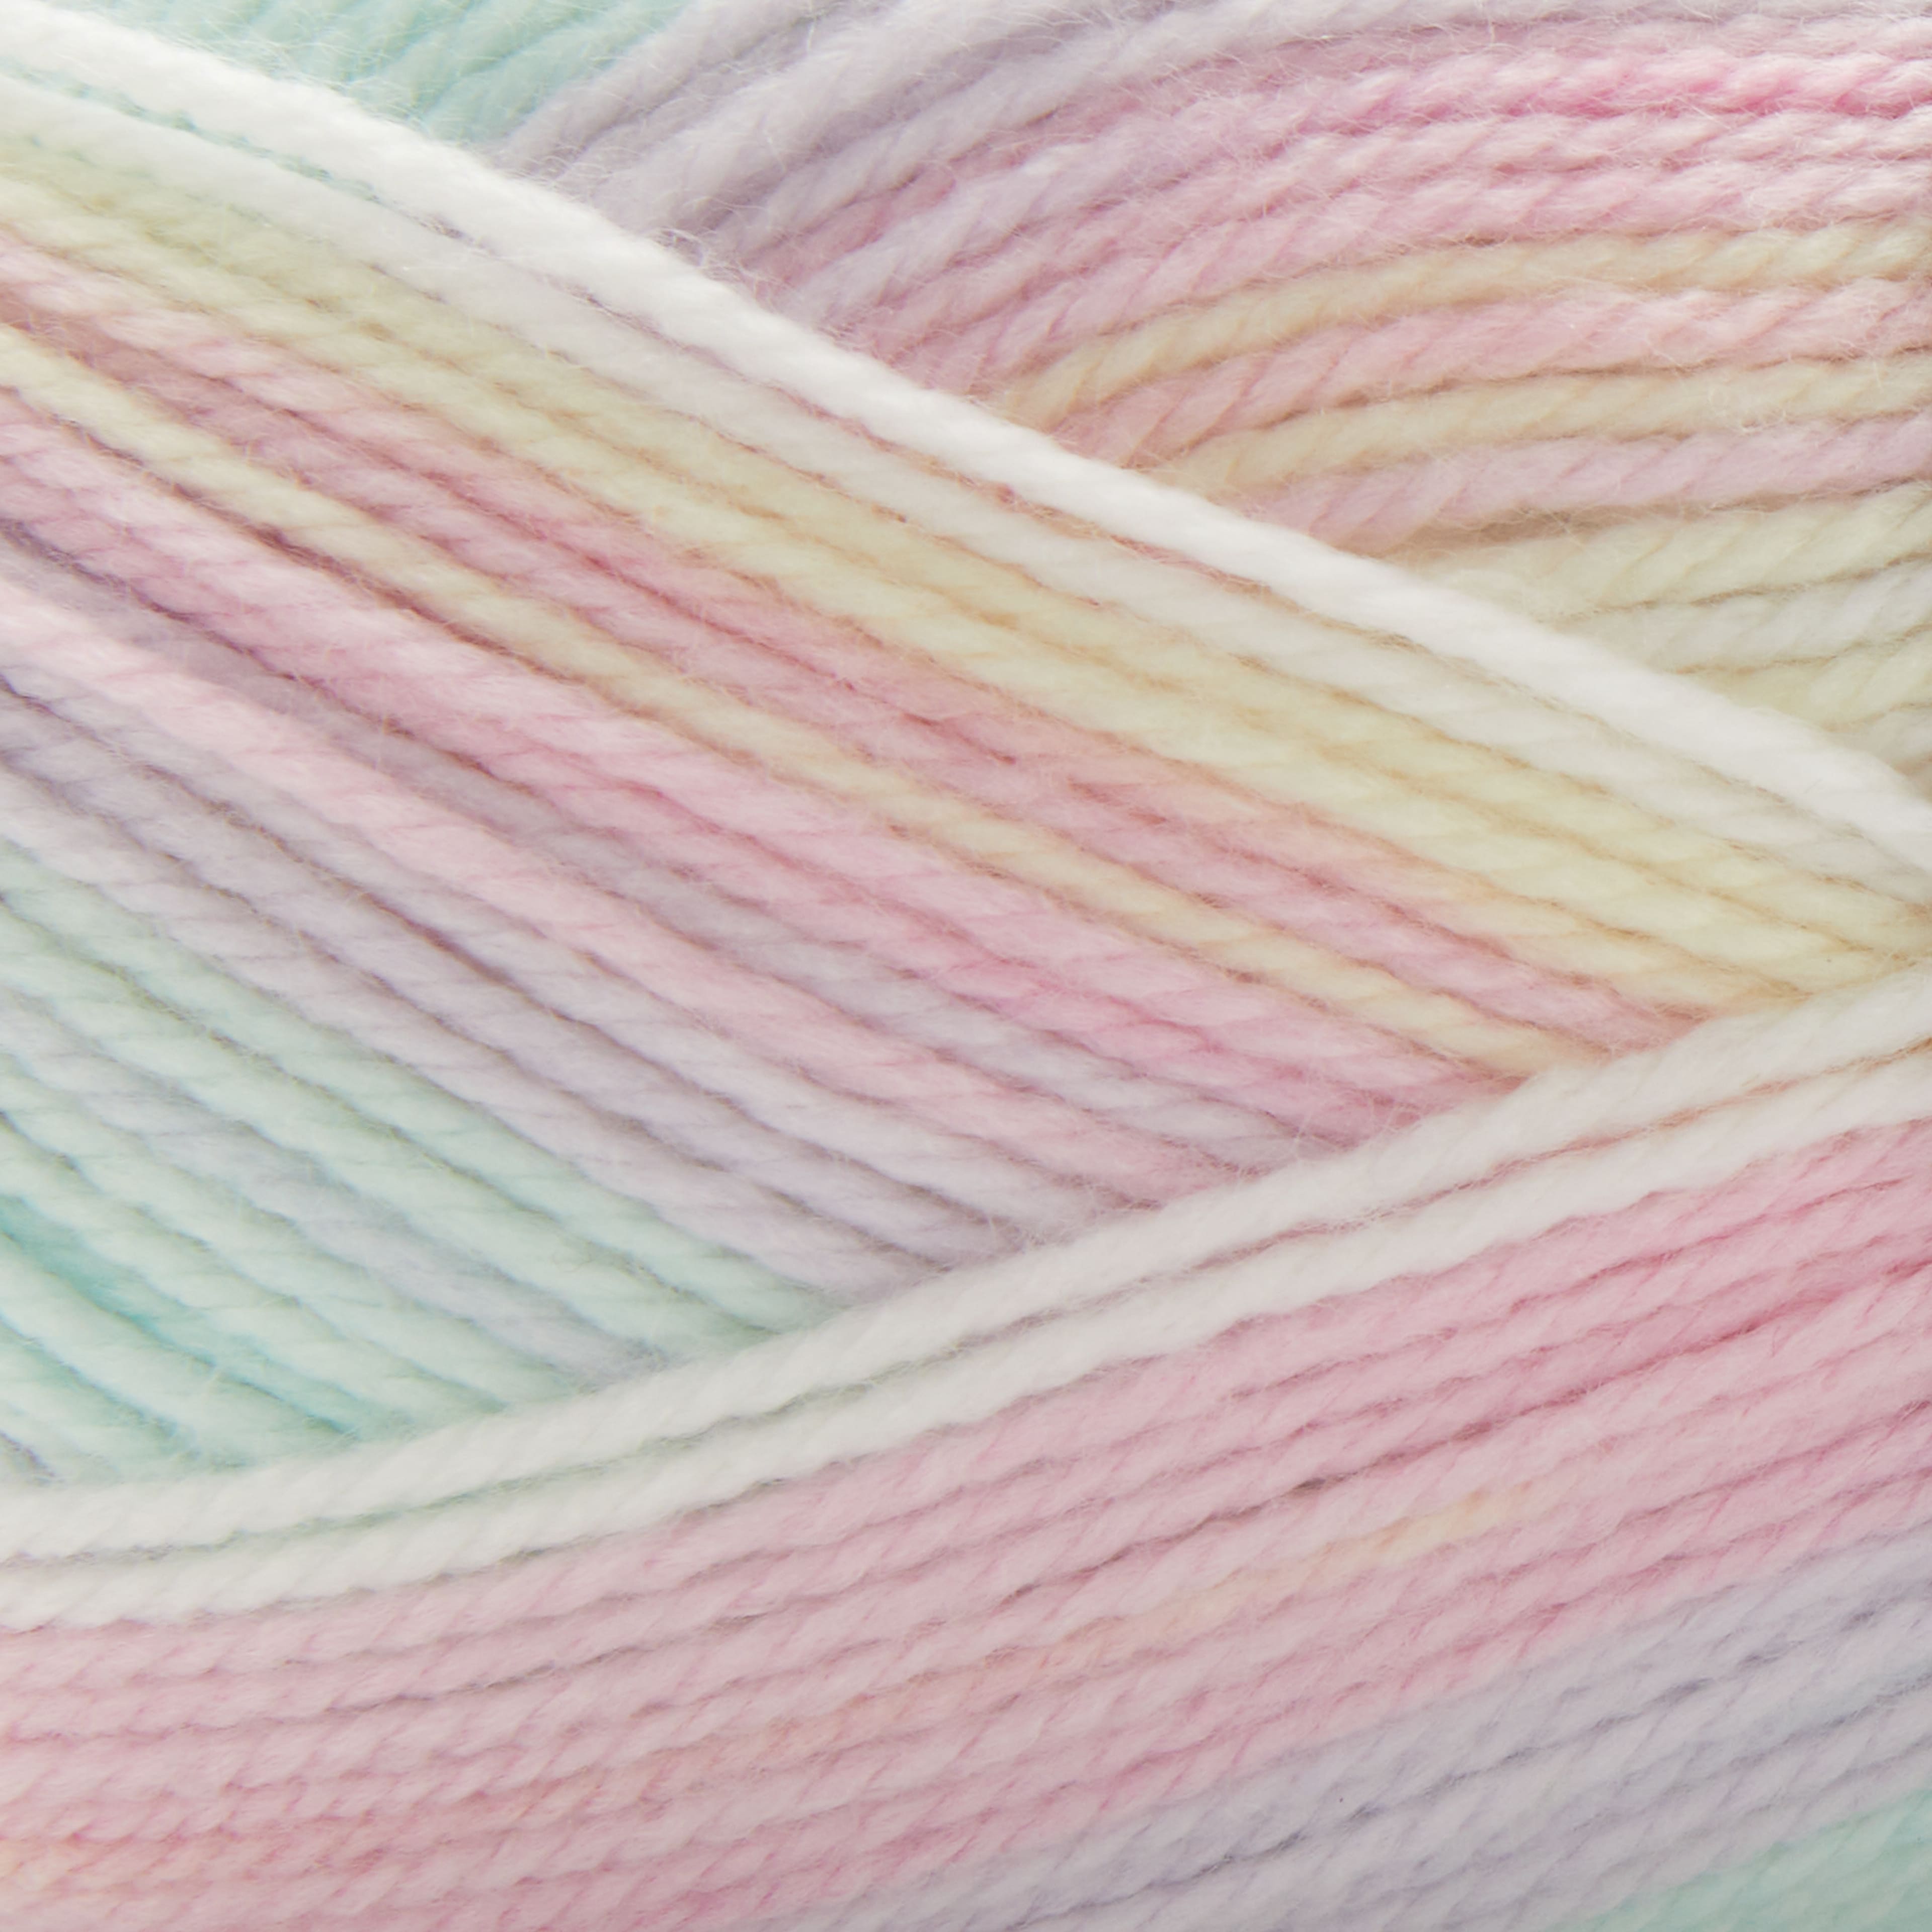 Baby Rainbow Yarn by Loops & Threads in Sky Ride | 5.3 | Michaels